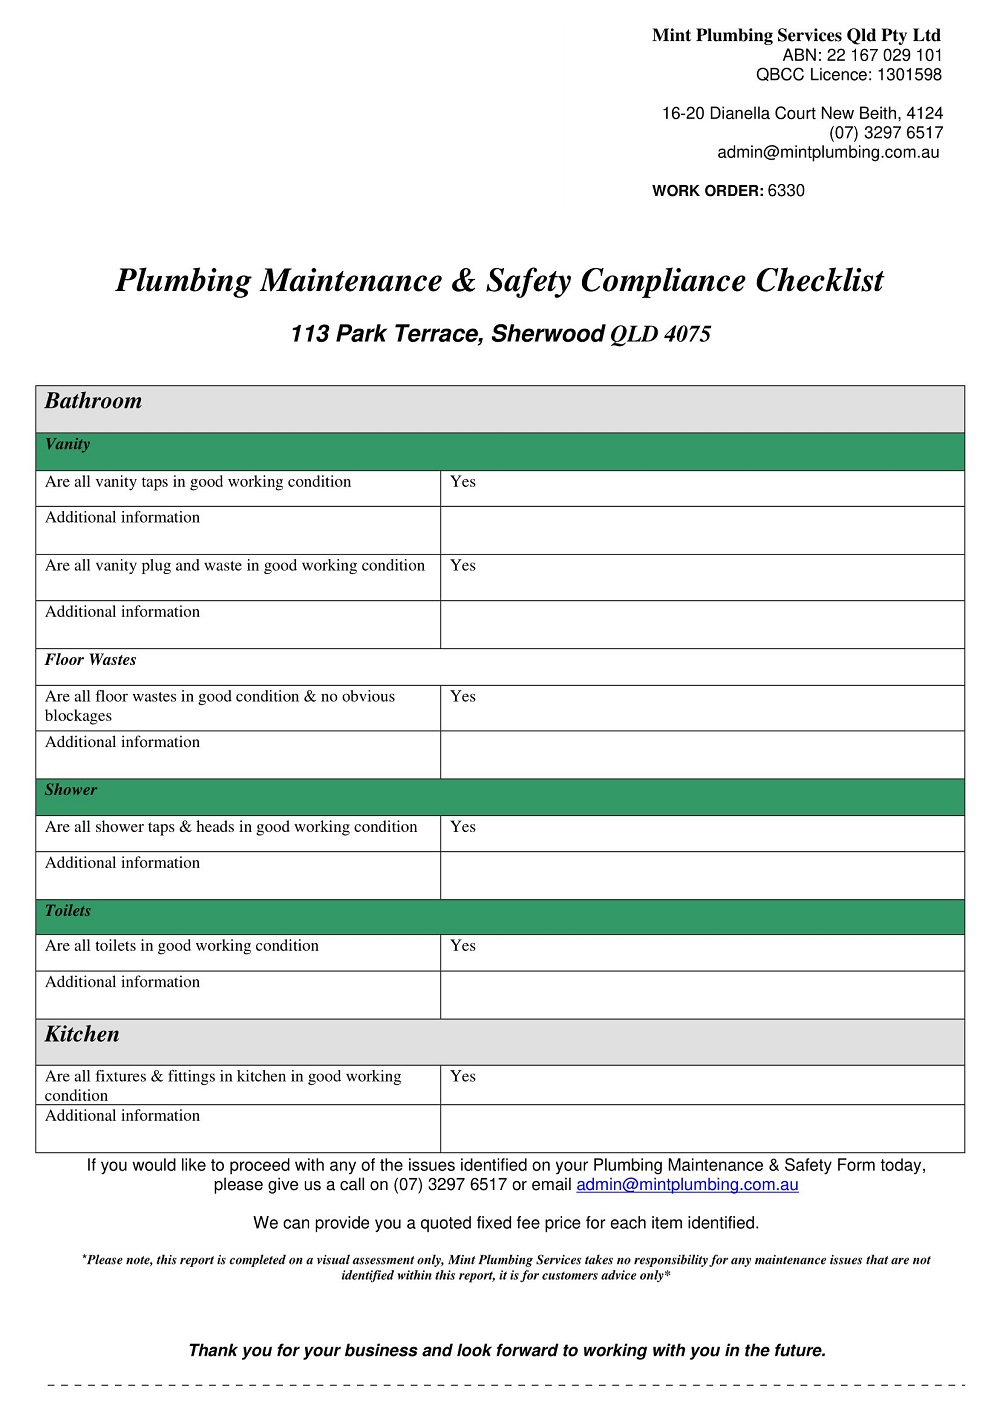 Plumbing Maintenance Safety Compliance Checklist